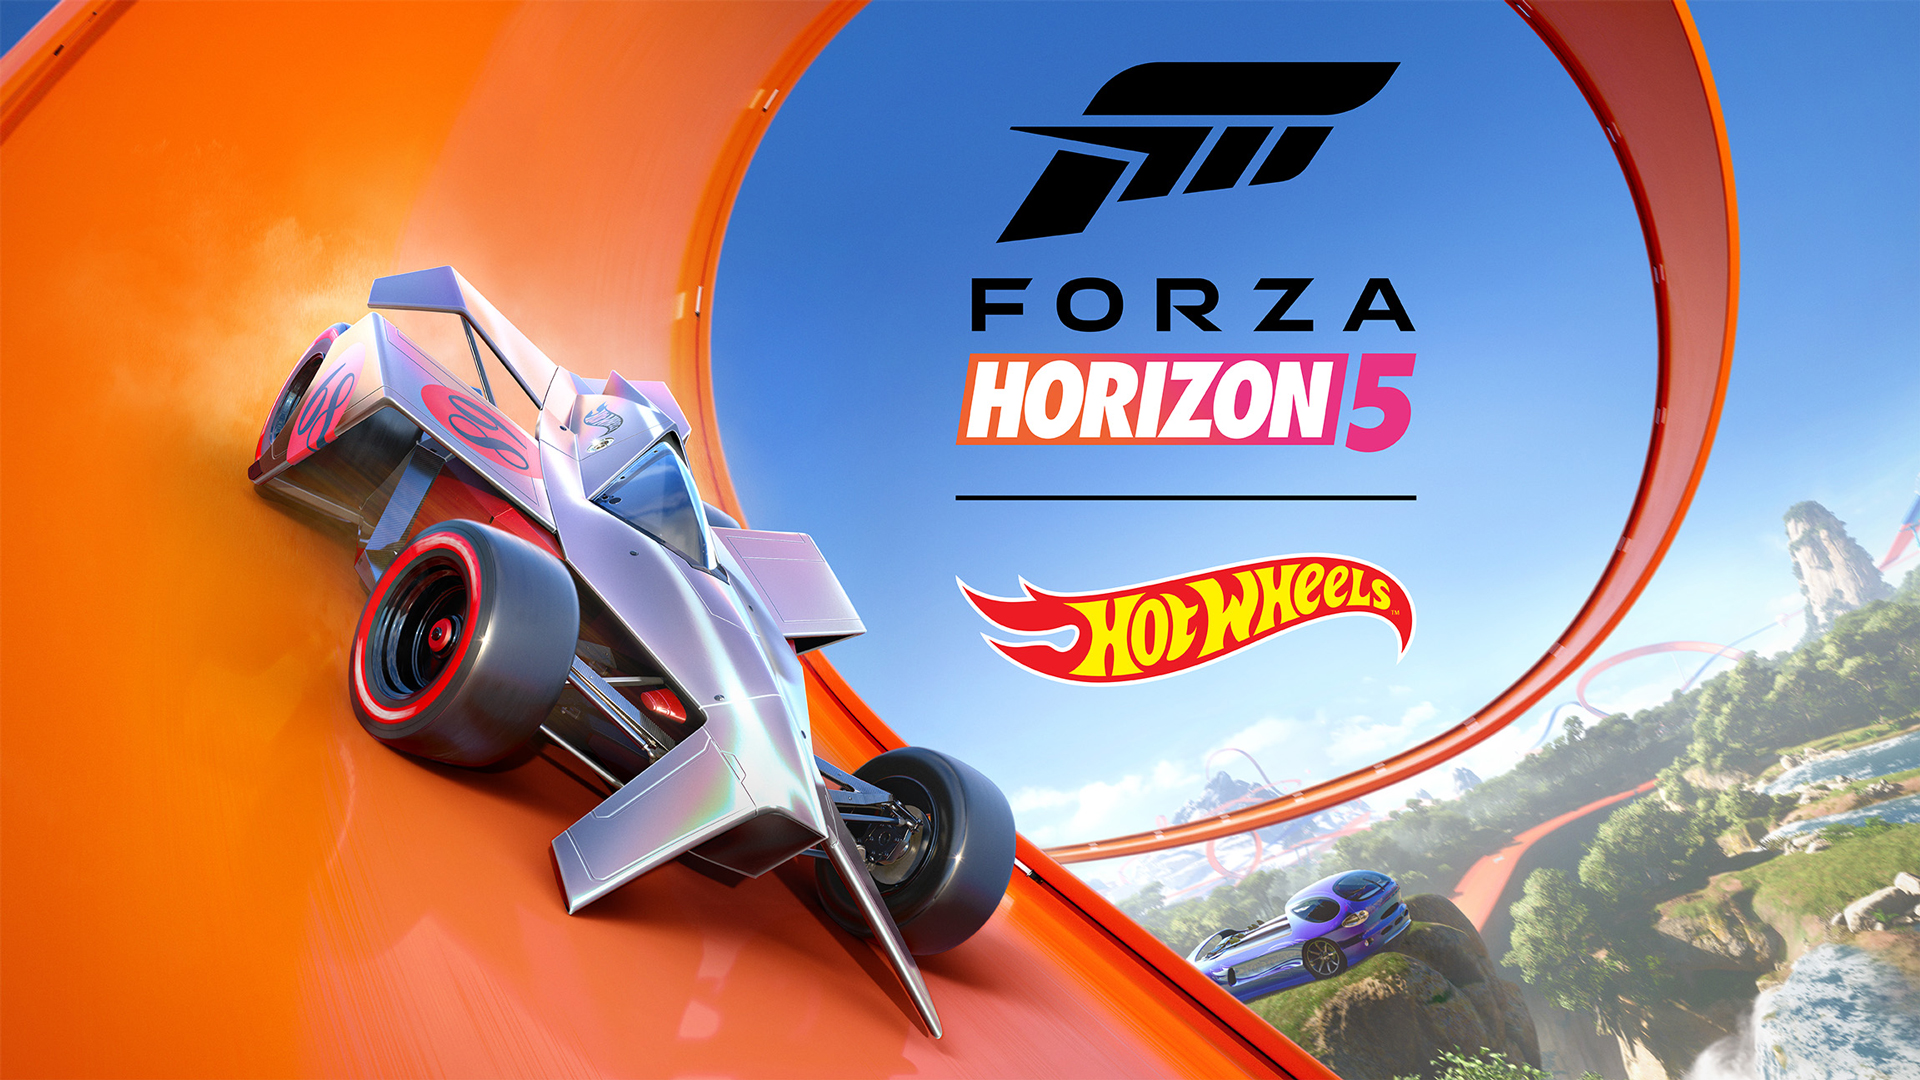 X35 Earthwalker Forza Horizon 5: Hot Wheels